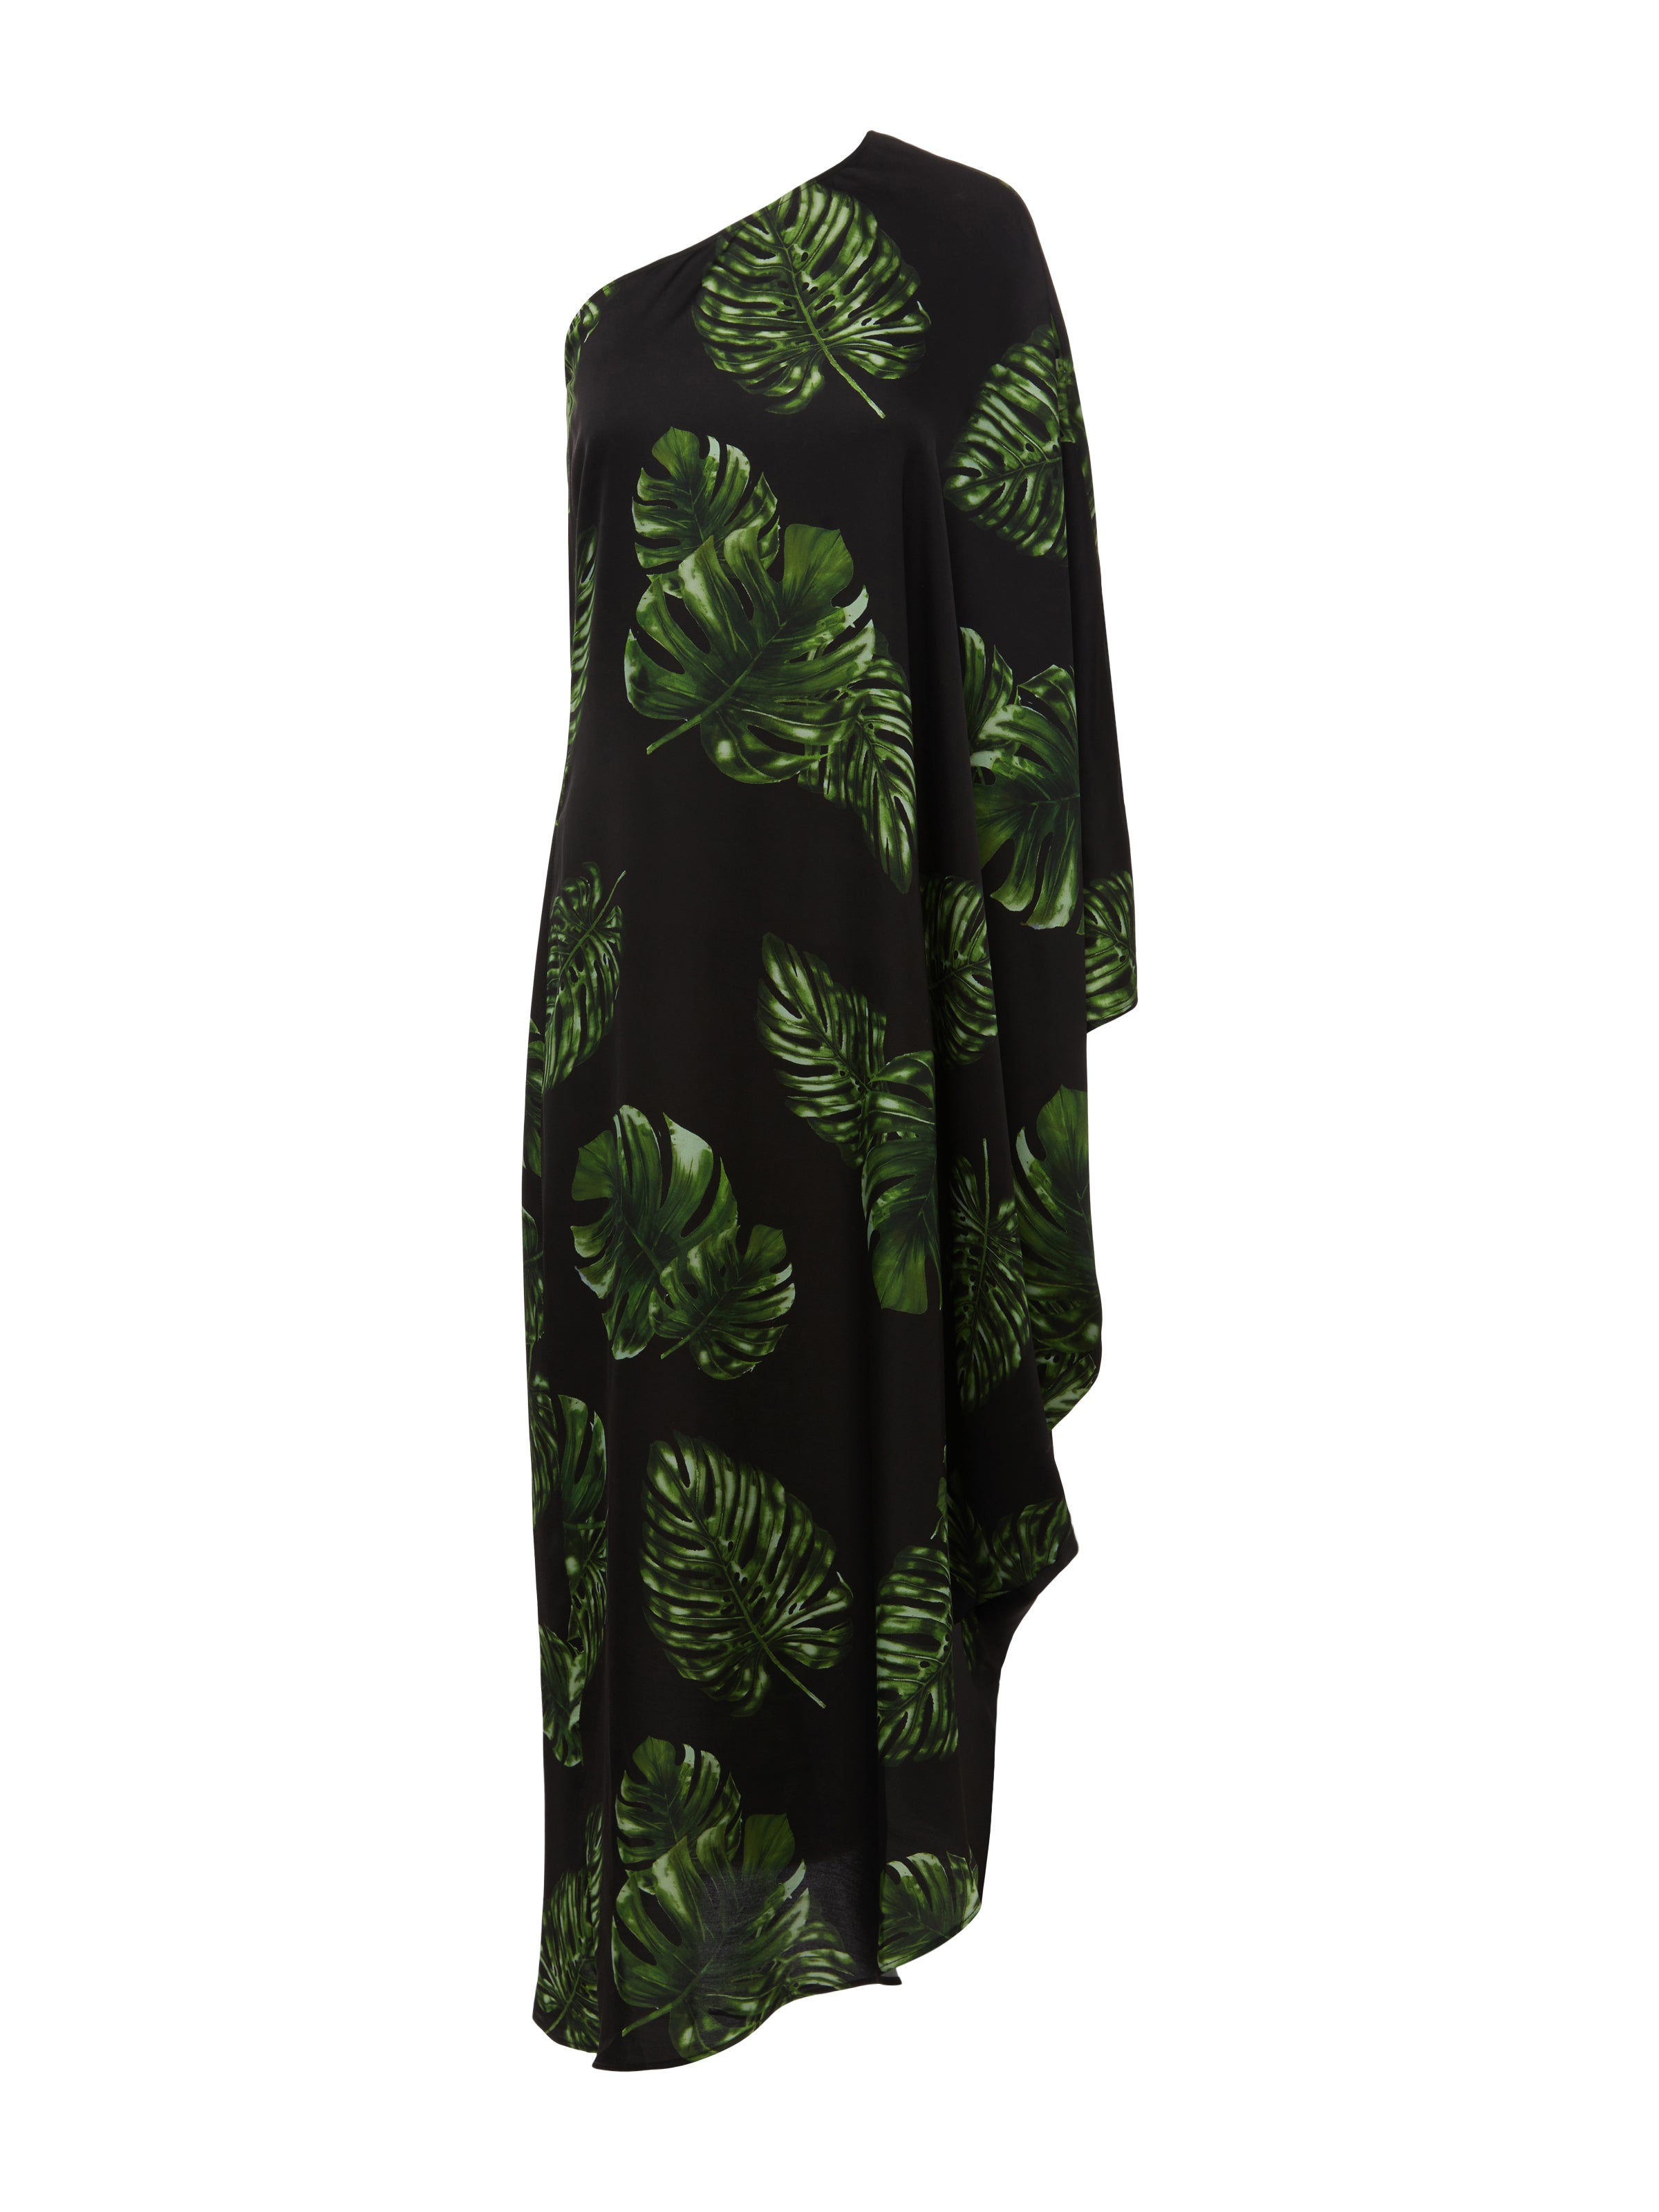 L'AGENCE Selena Dress In Black/Tropical Green Multi Large Palm